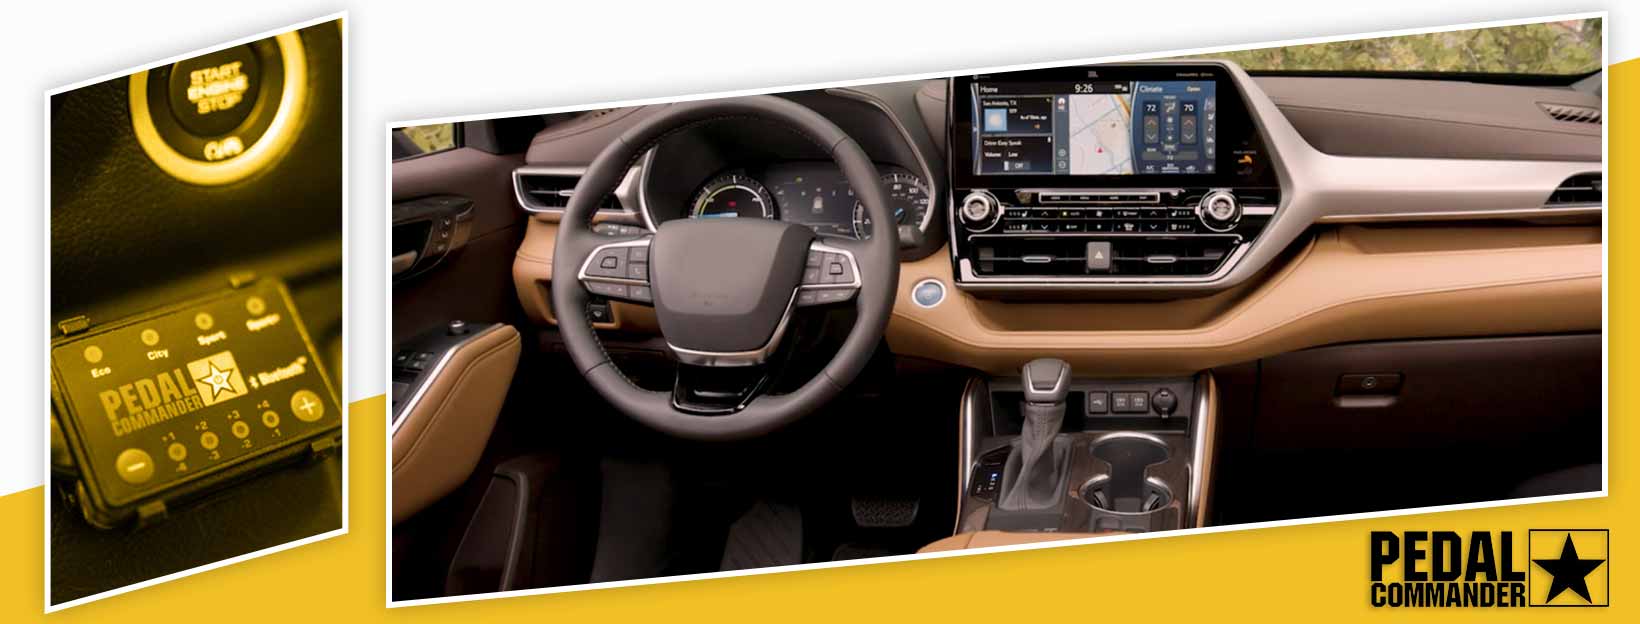 Pedal Commander for Toyota Highlander - interior